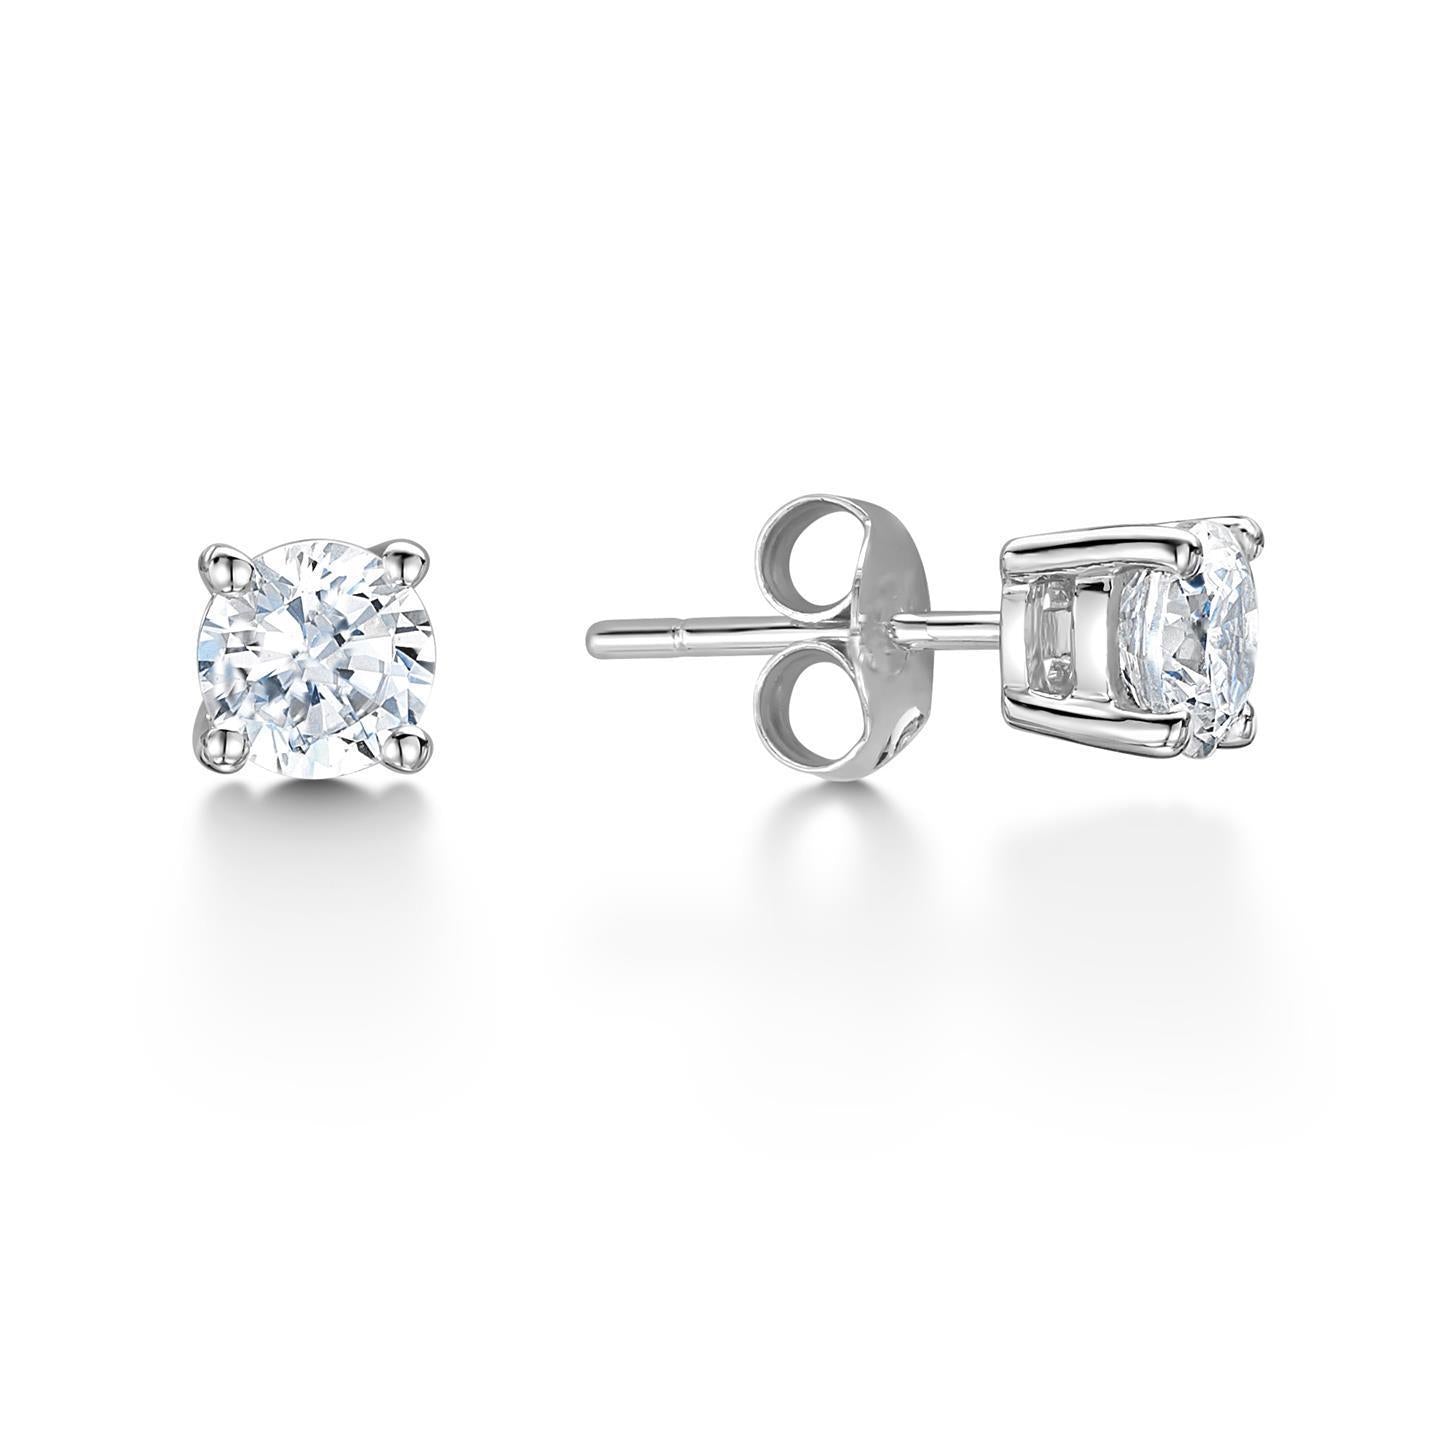 2.90 Carats Round Cut Genuine Diamonds Studs Earrings White Gold 14K